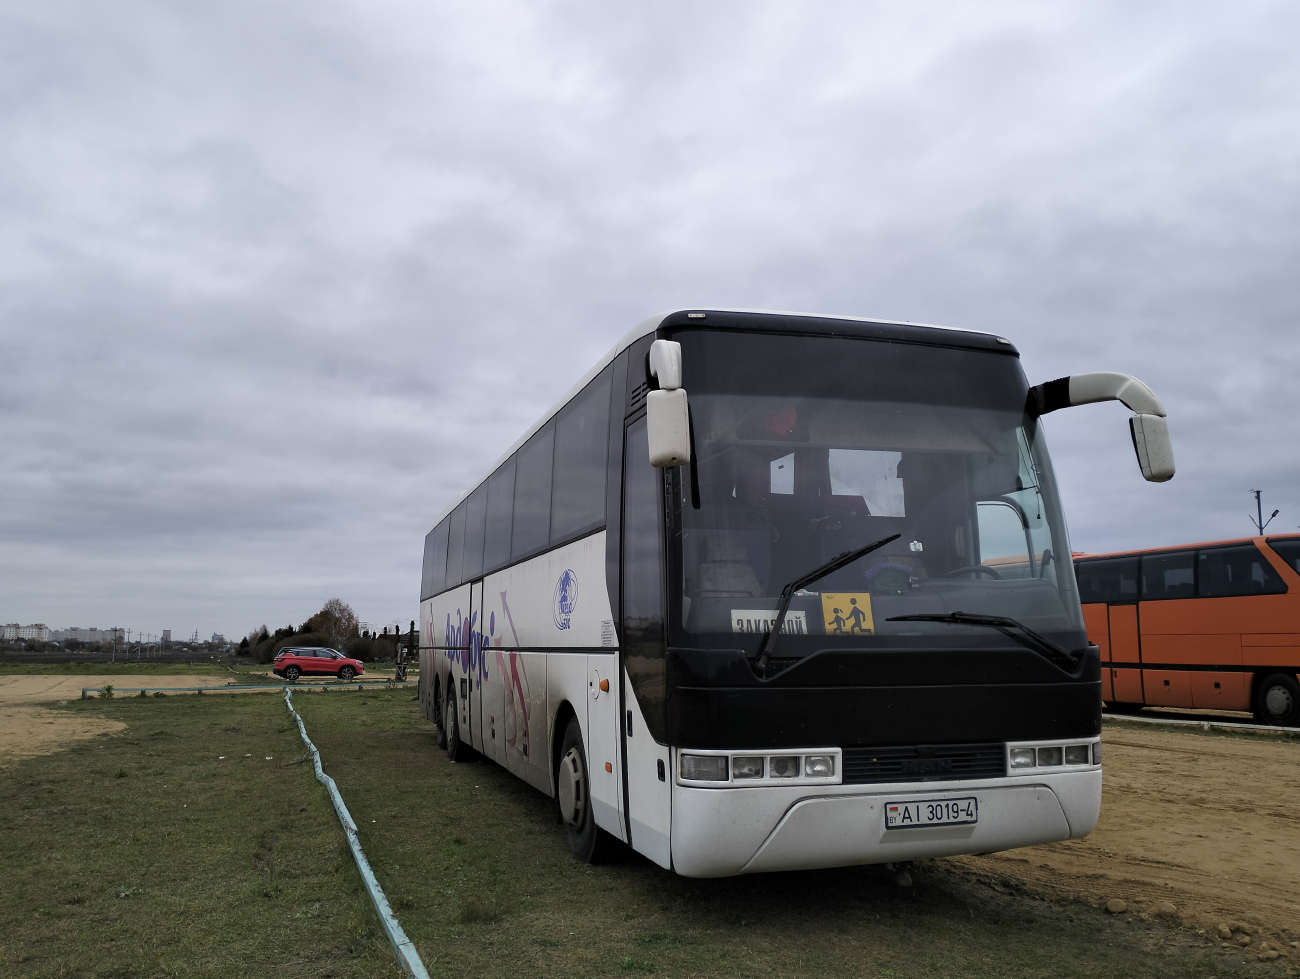 Grodna, MAN A32 Lion's Top Coach RH463 No. АІ 3019-4